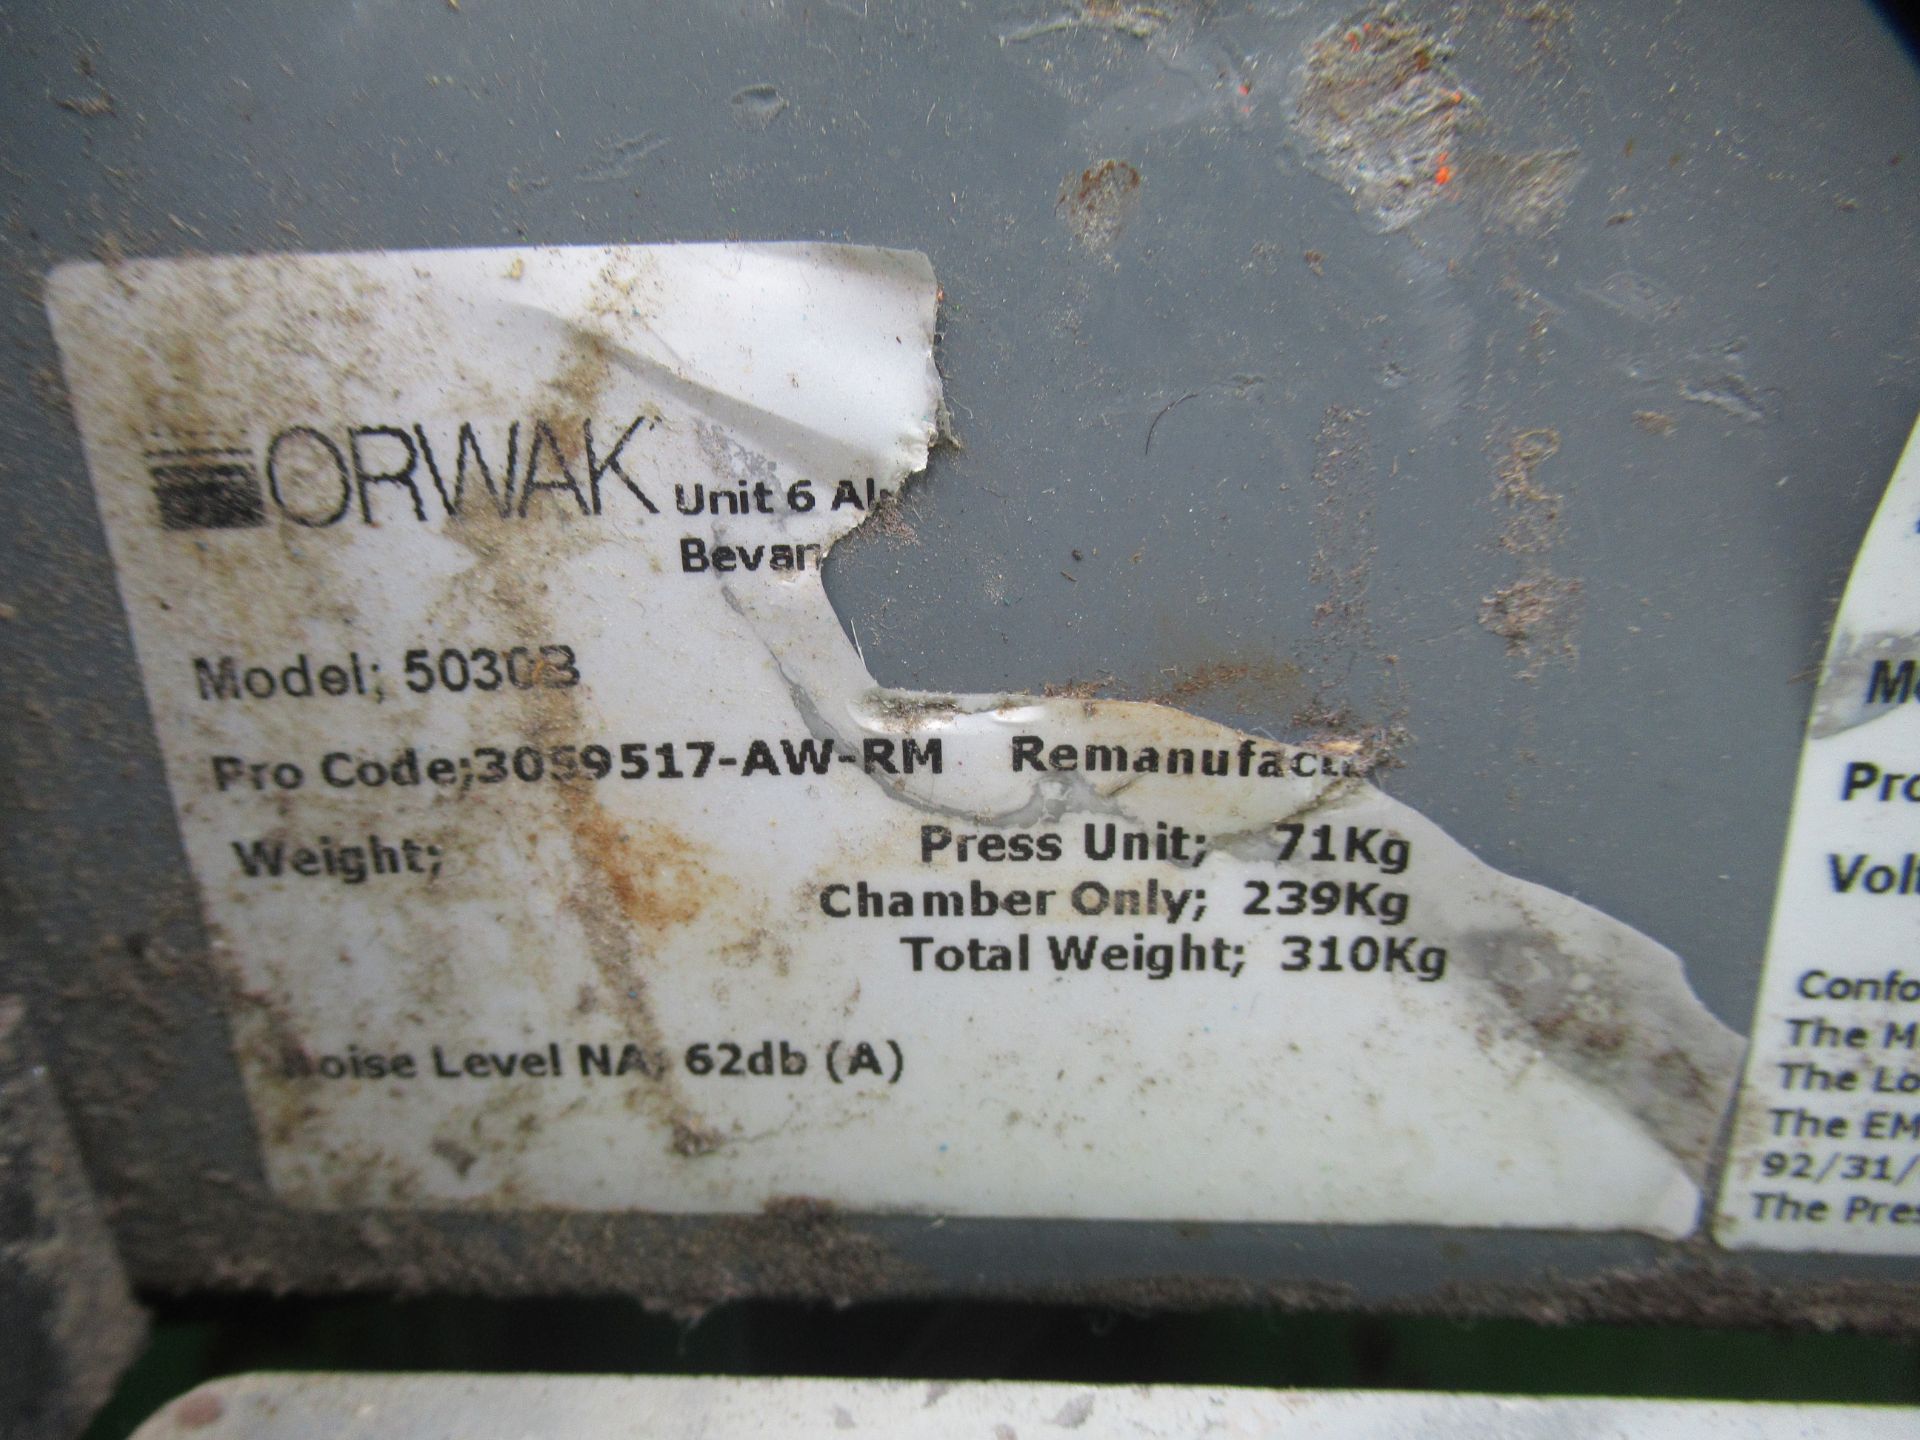 Orwak 5030B Compactor - Image 4 of 4